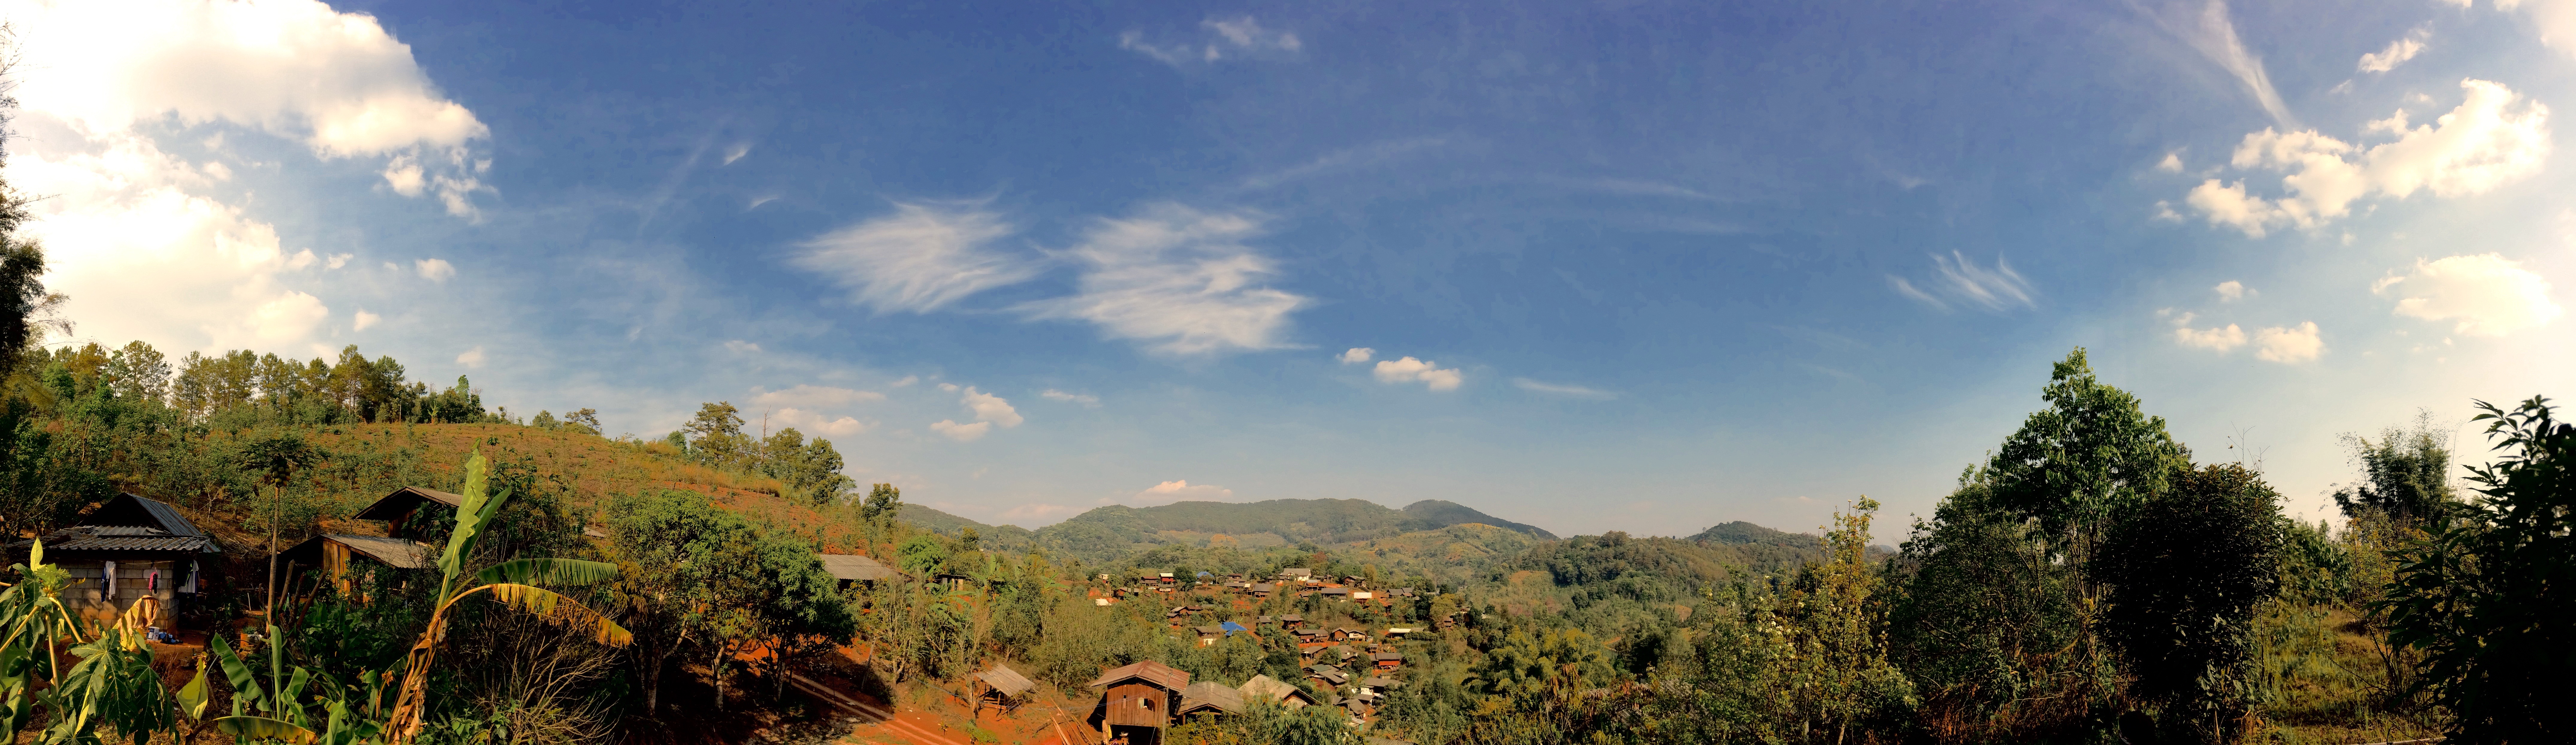 Karen Village just south of Chiang Mai: Population 200